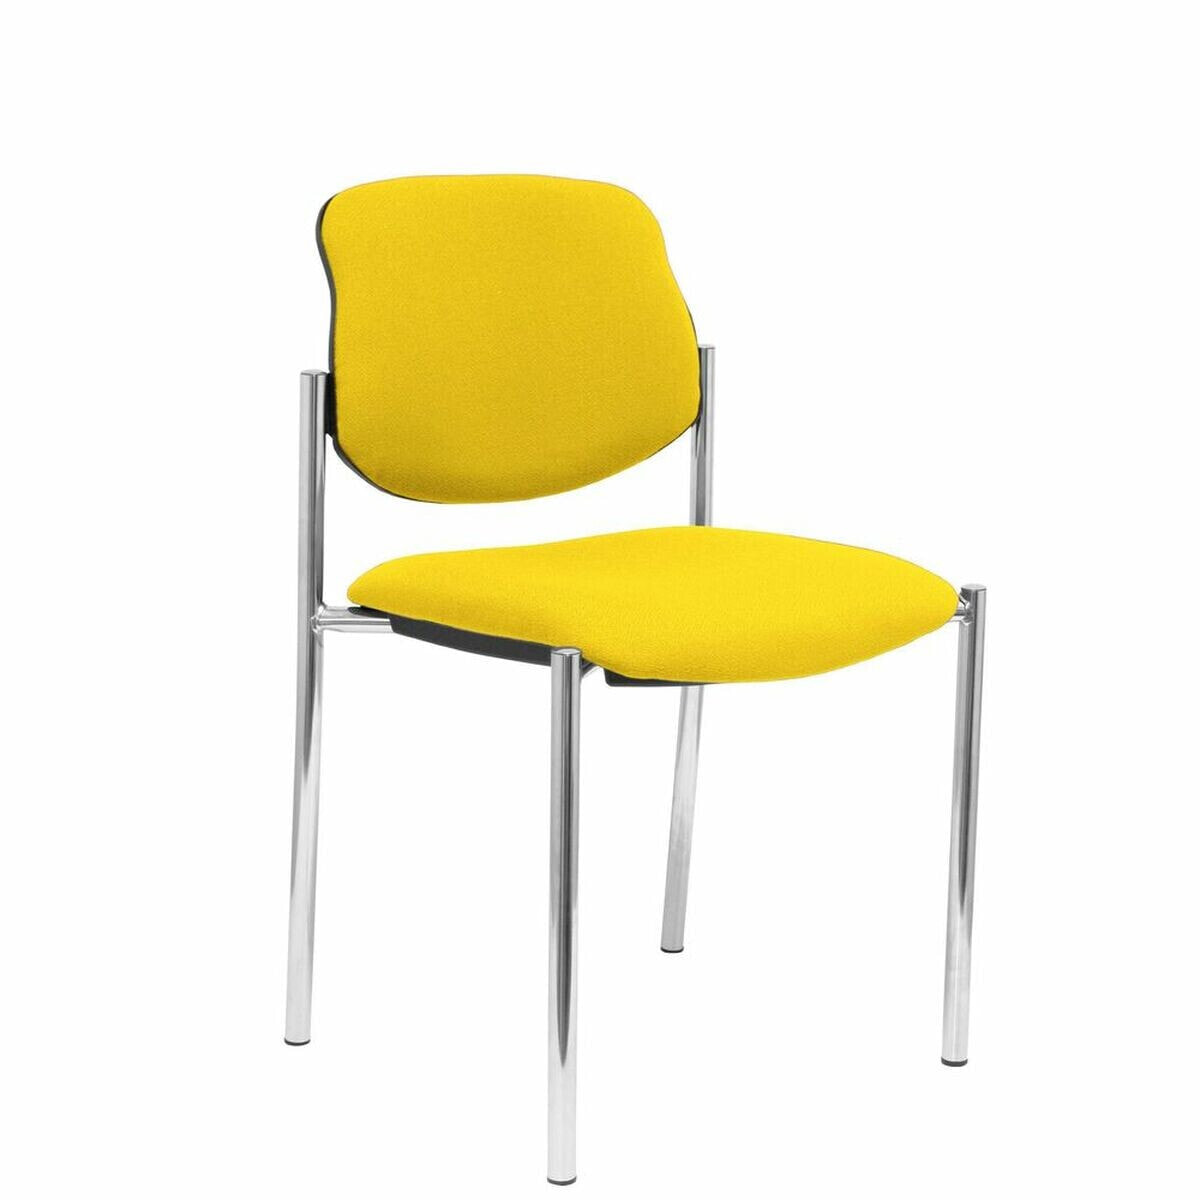 Reception Chair Villalgordo P&C BALI100 Imitation leather Yellow